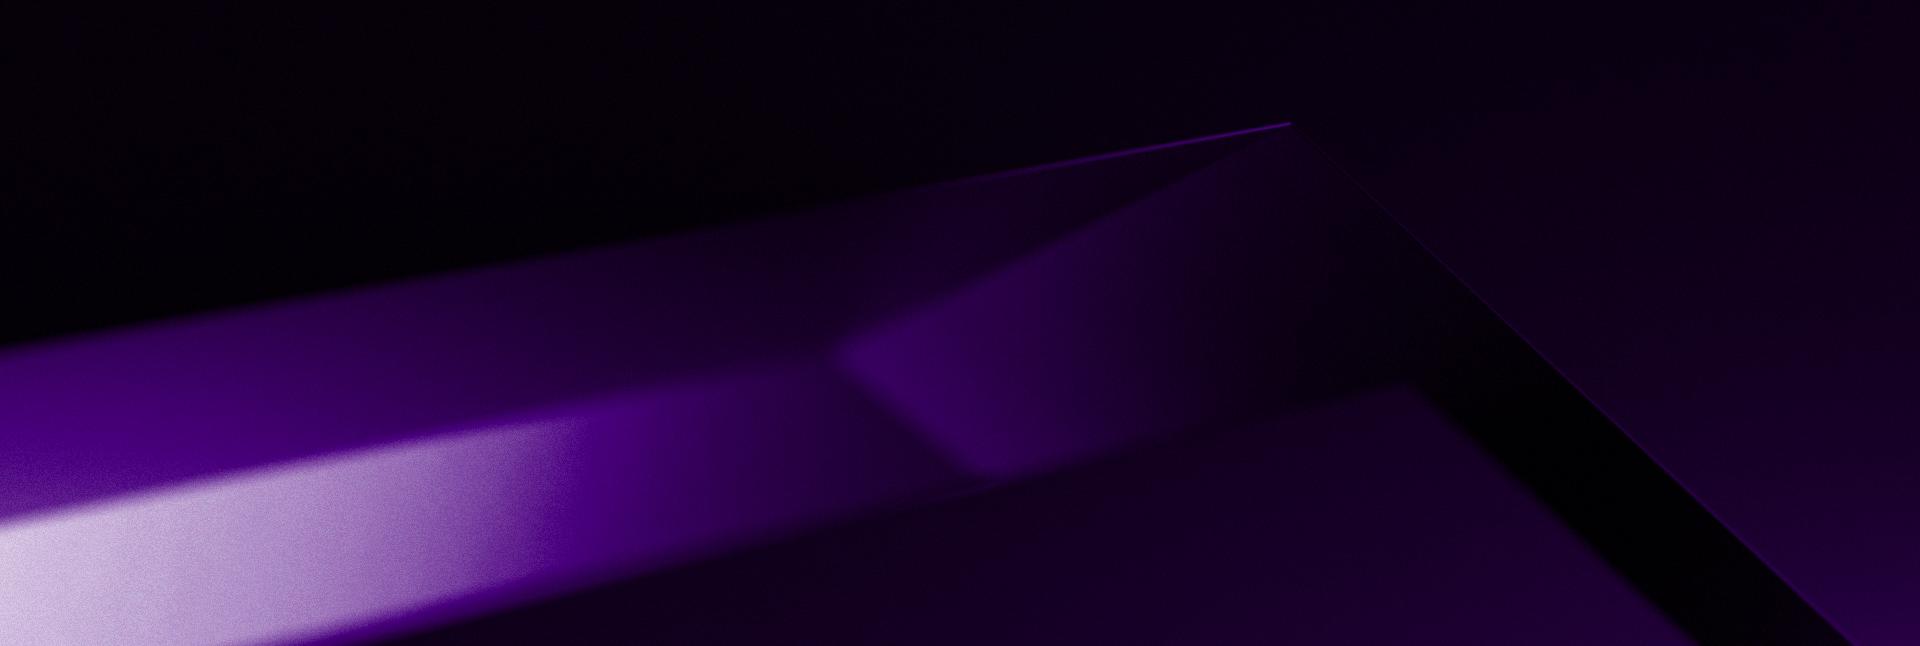 rra-background-purple-2.jpg